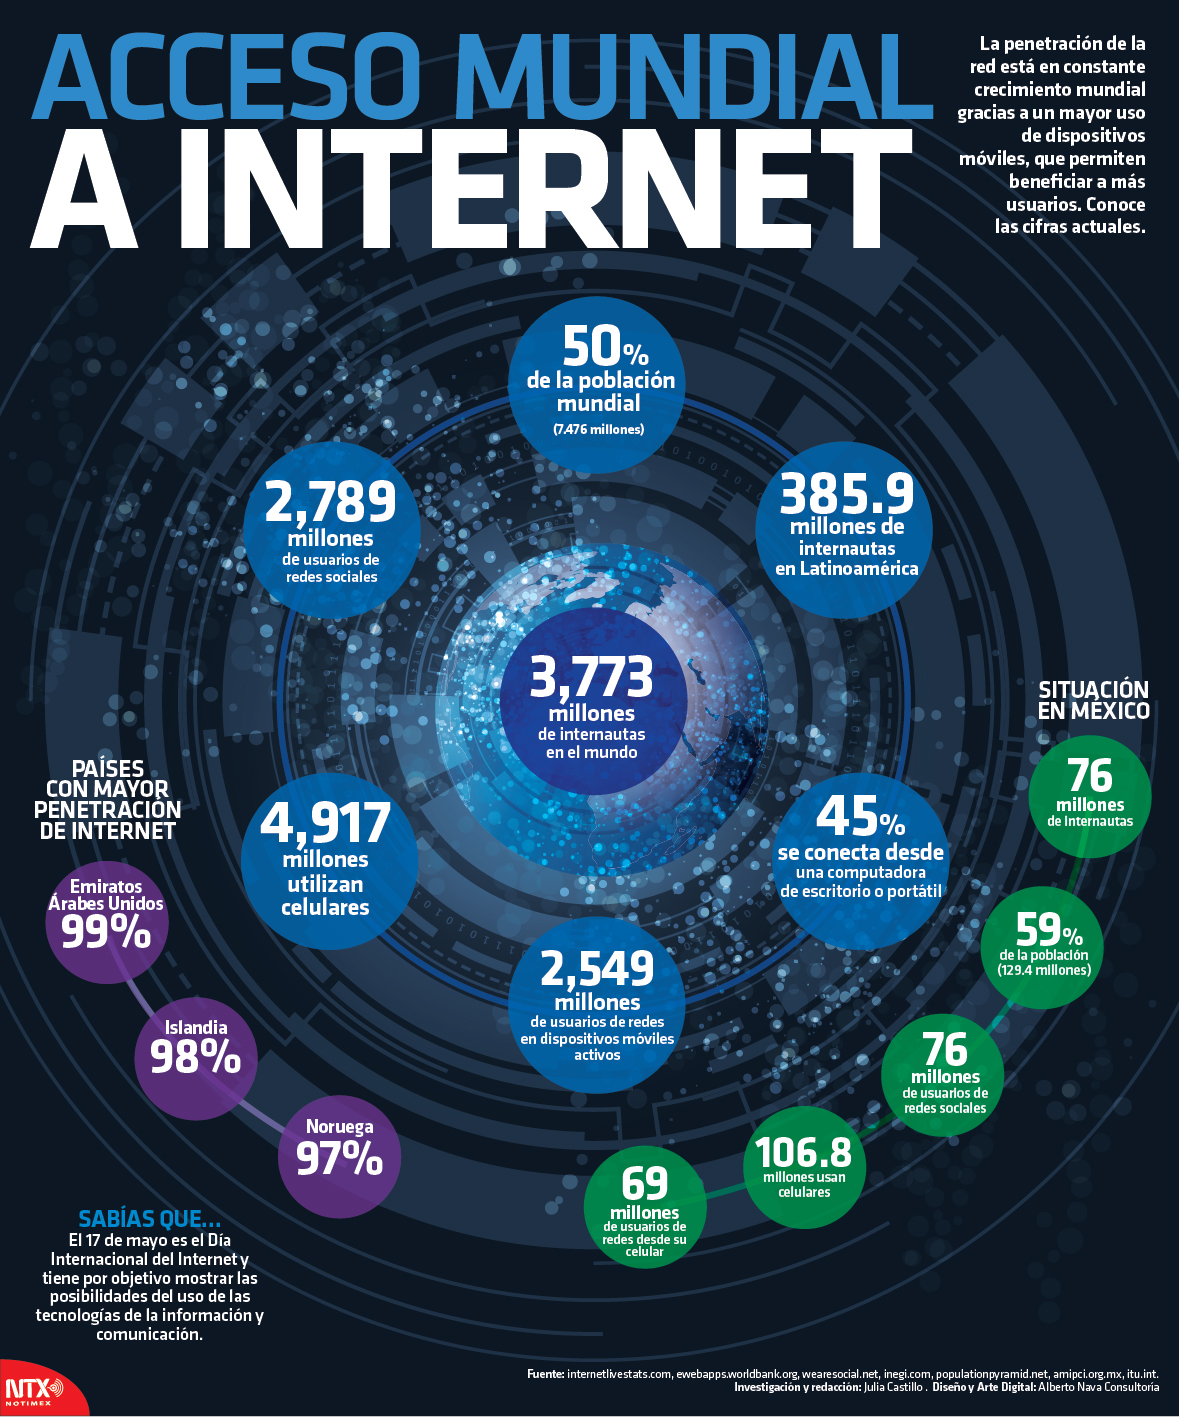 Acceso mundial al internet